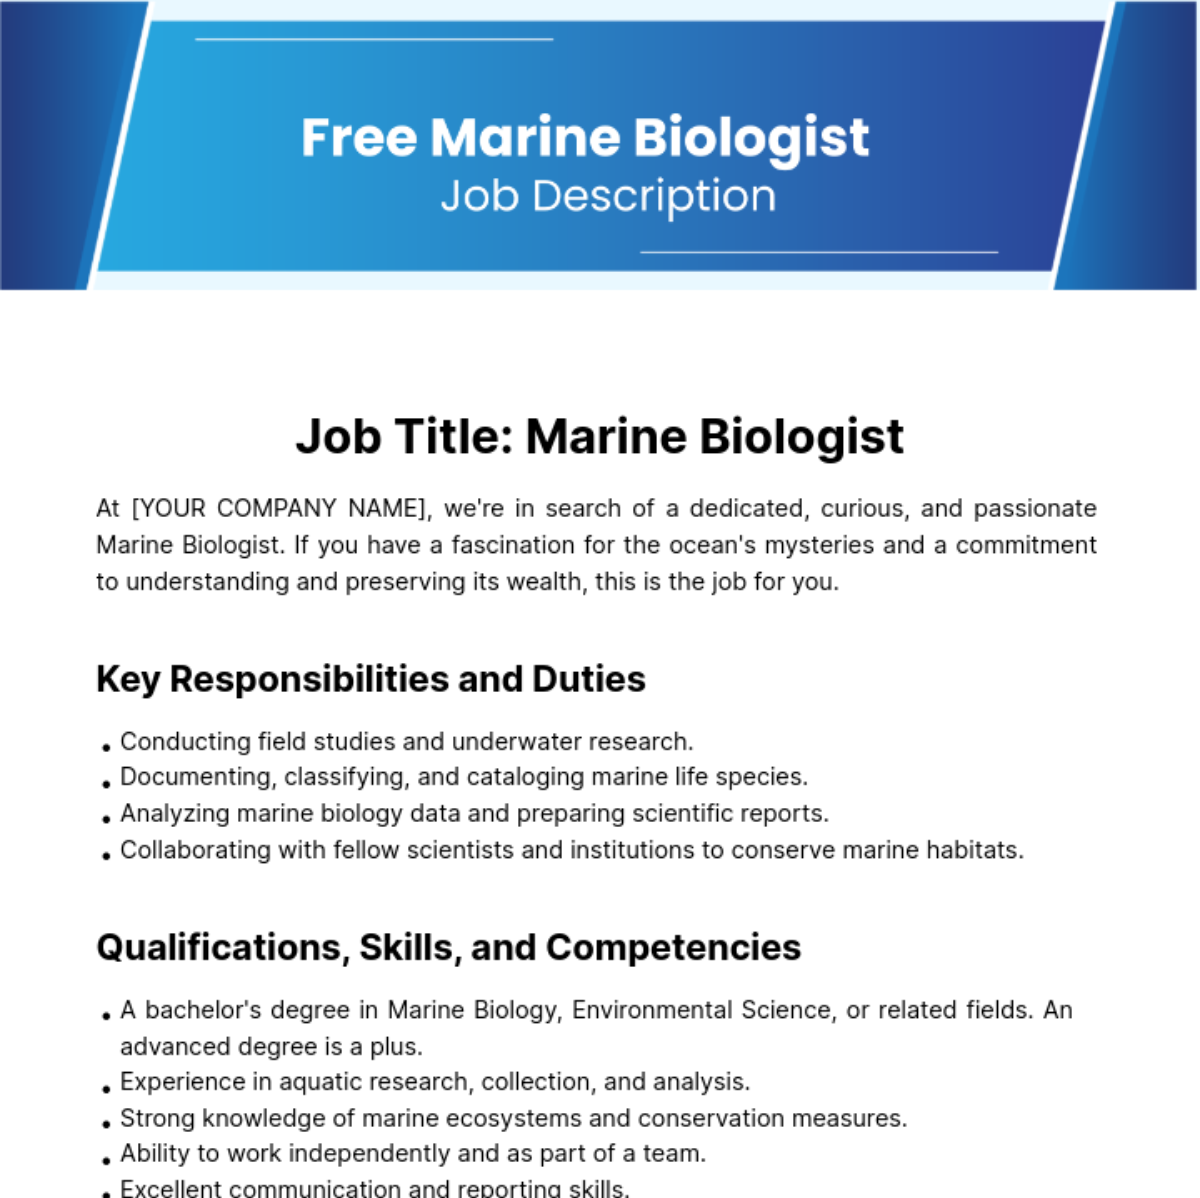 Free Marine Biologist Job Description Template